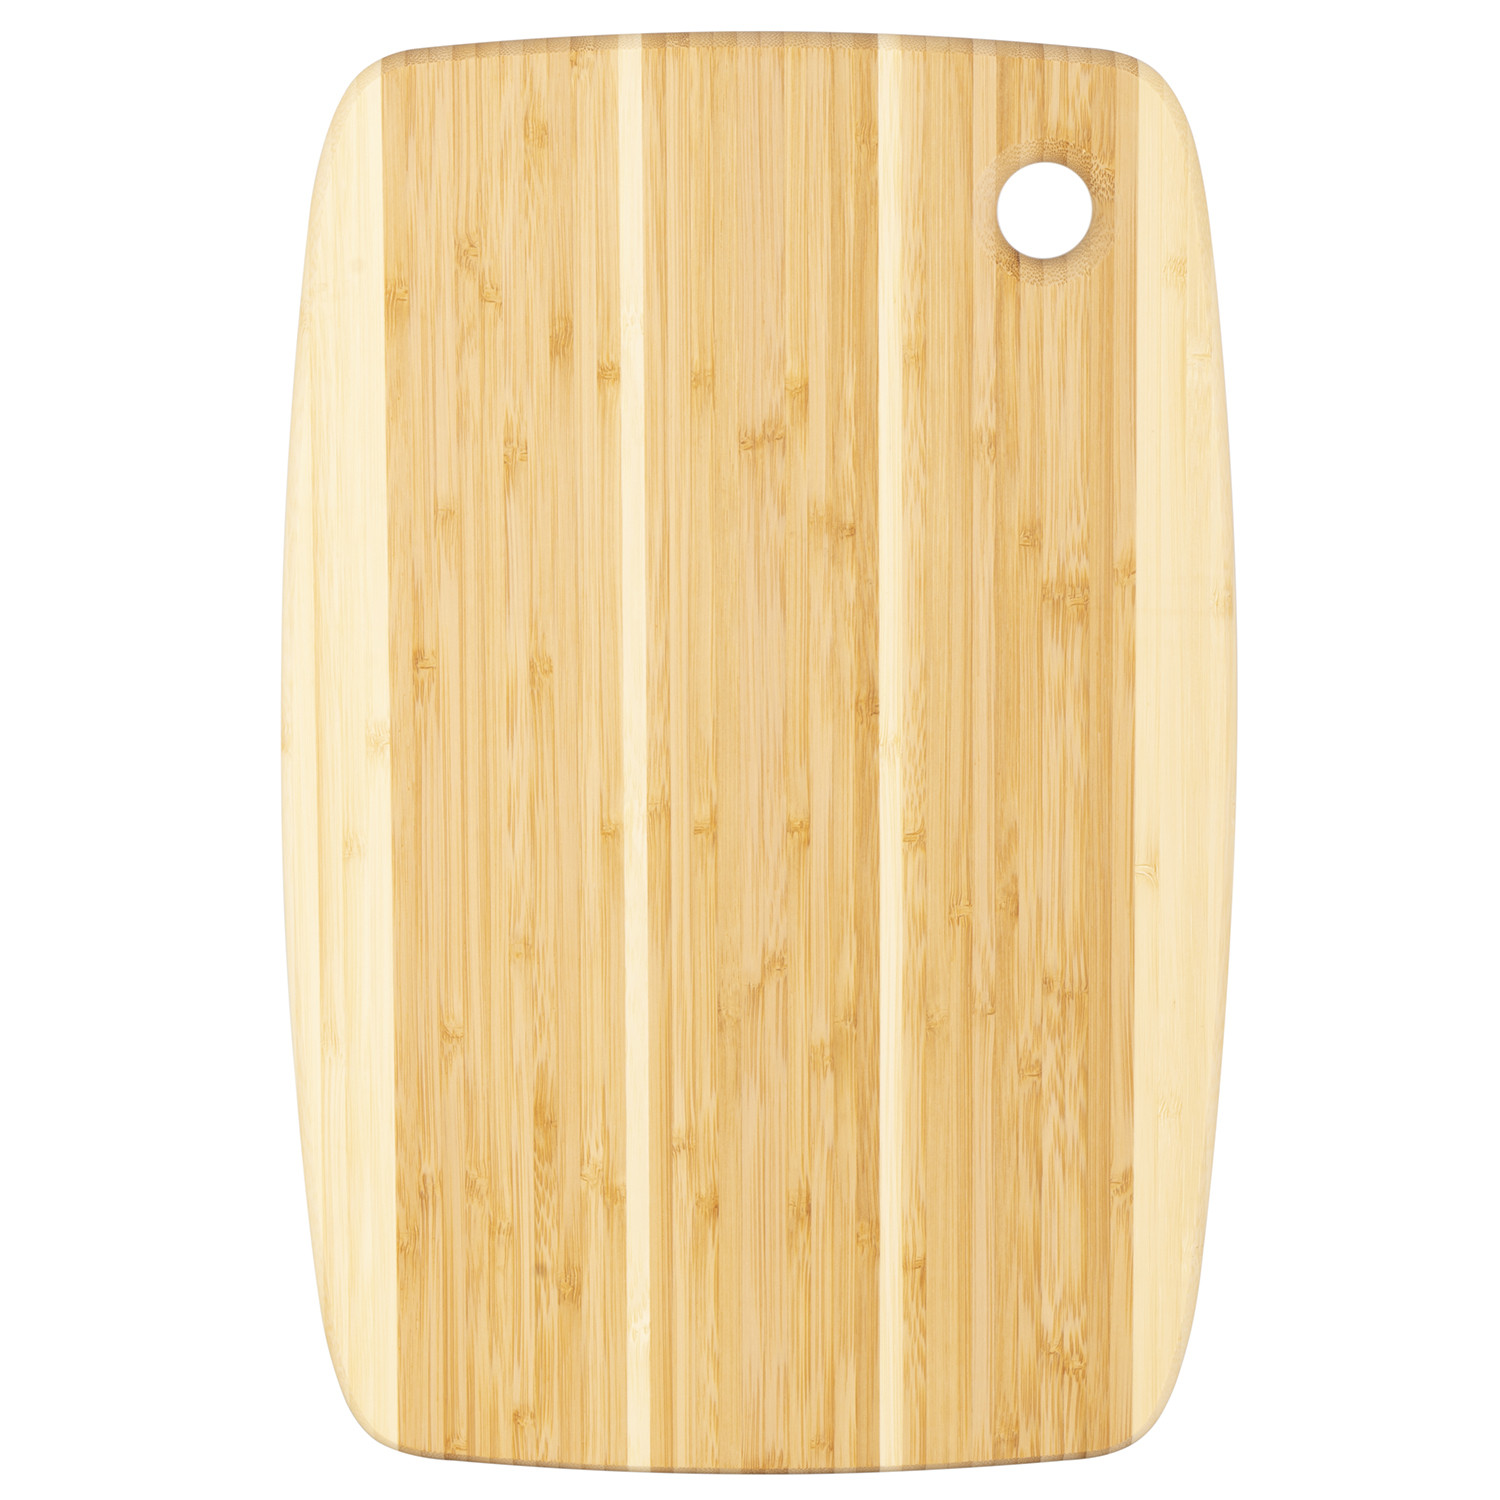 Bamboo Chopping Board with Thumb Hole Image 1